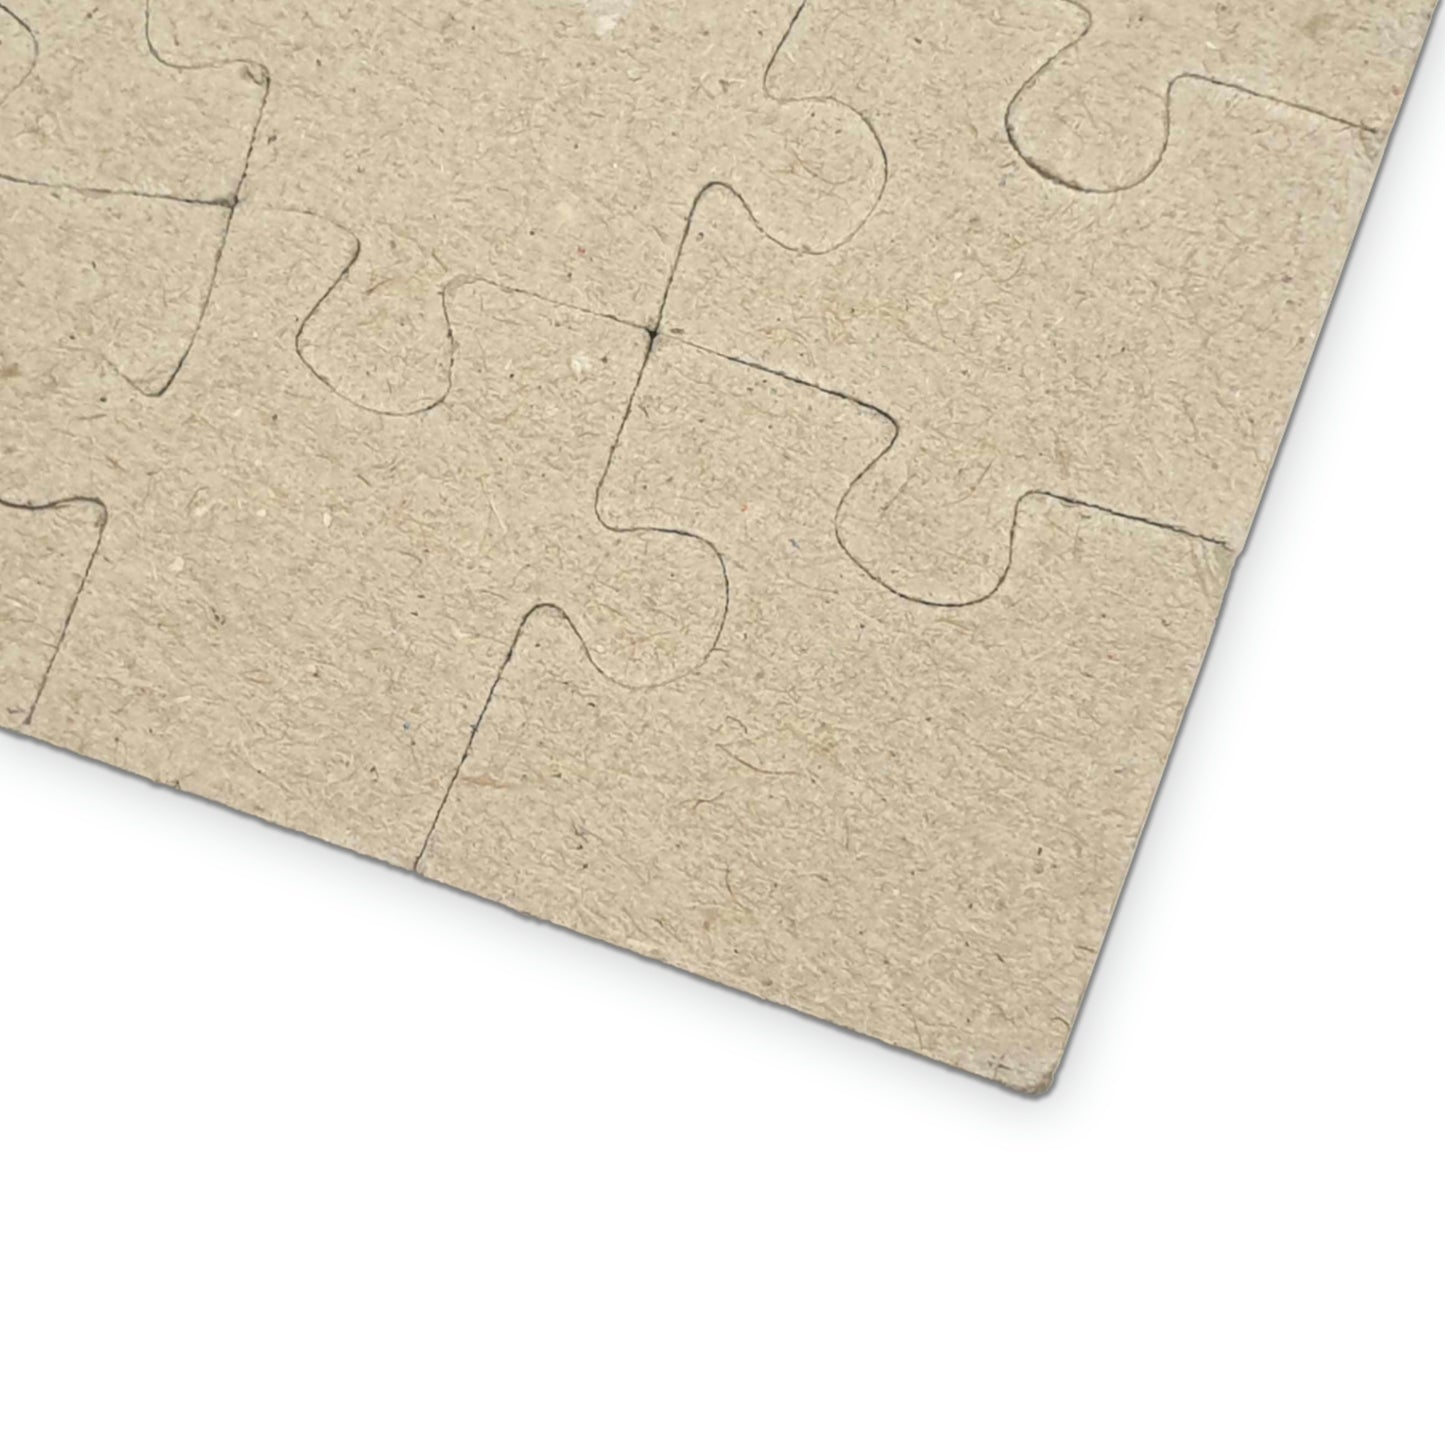 The Patriot Joe Morton - 1000 Piece Jigsaw Puzzle